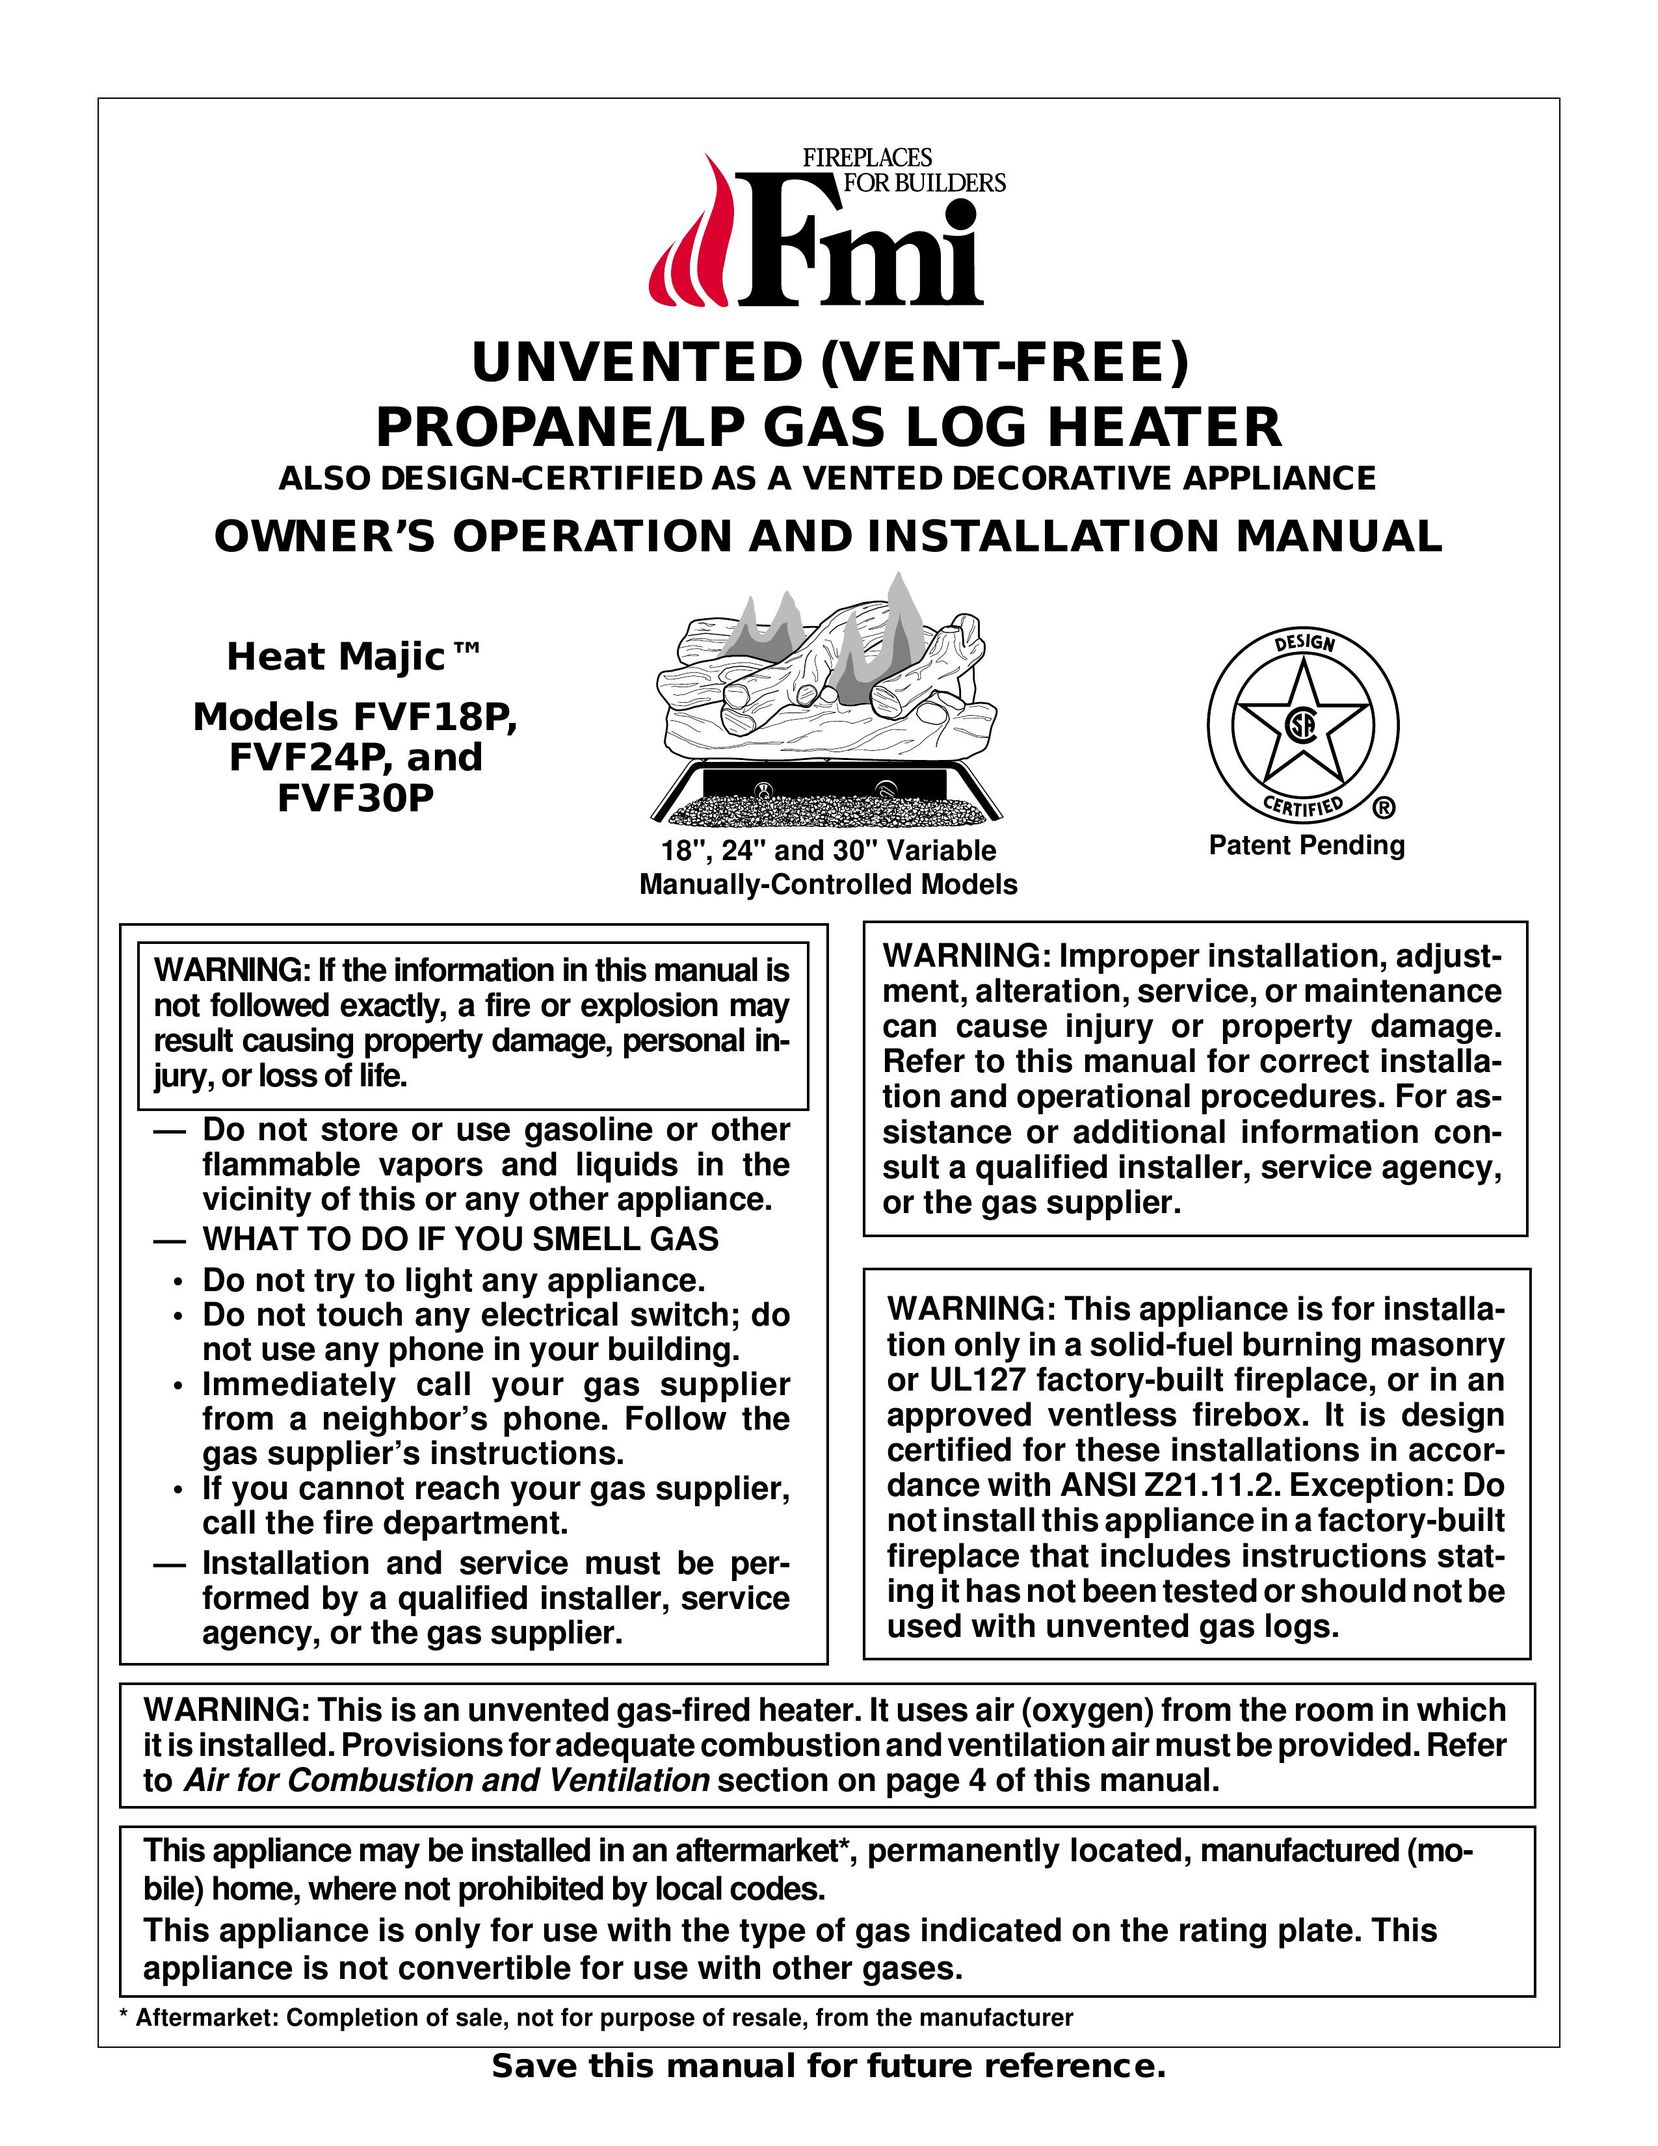 FMI FVF30P Gas Heater User Manual